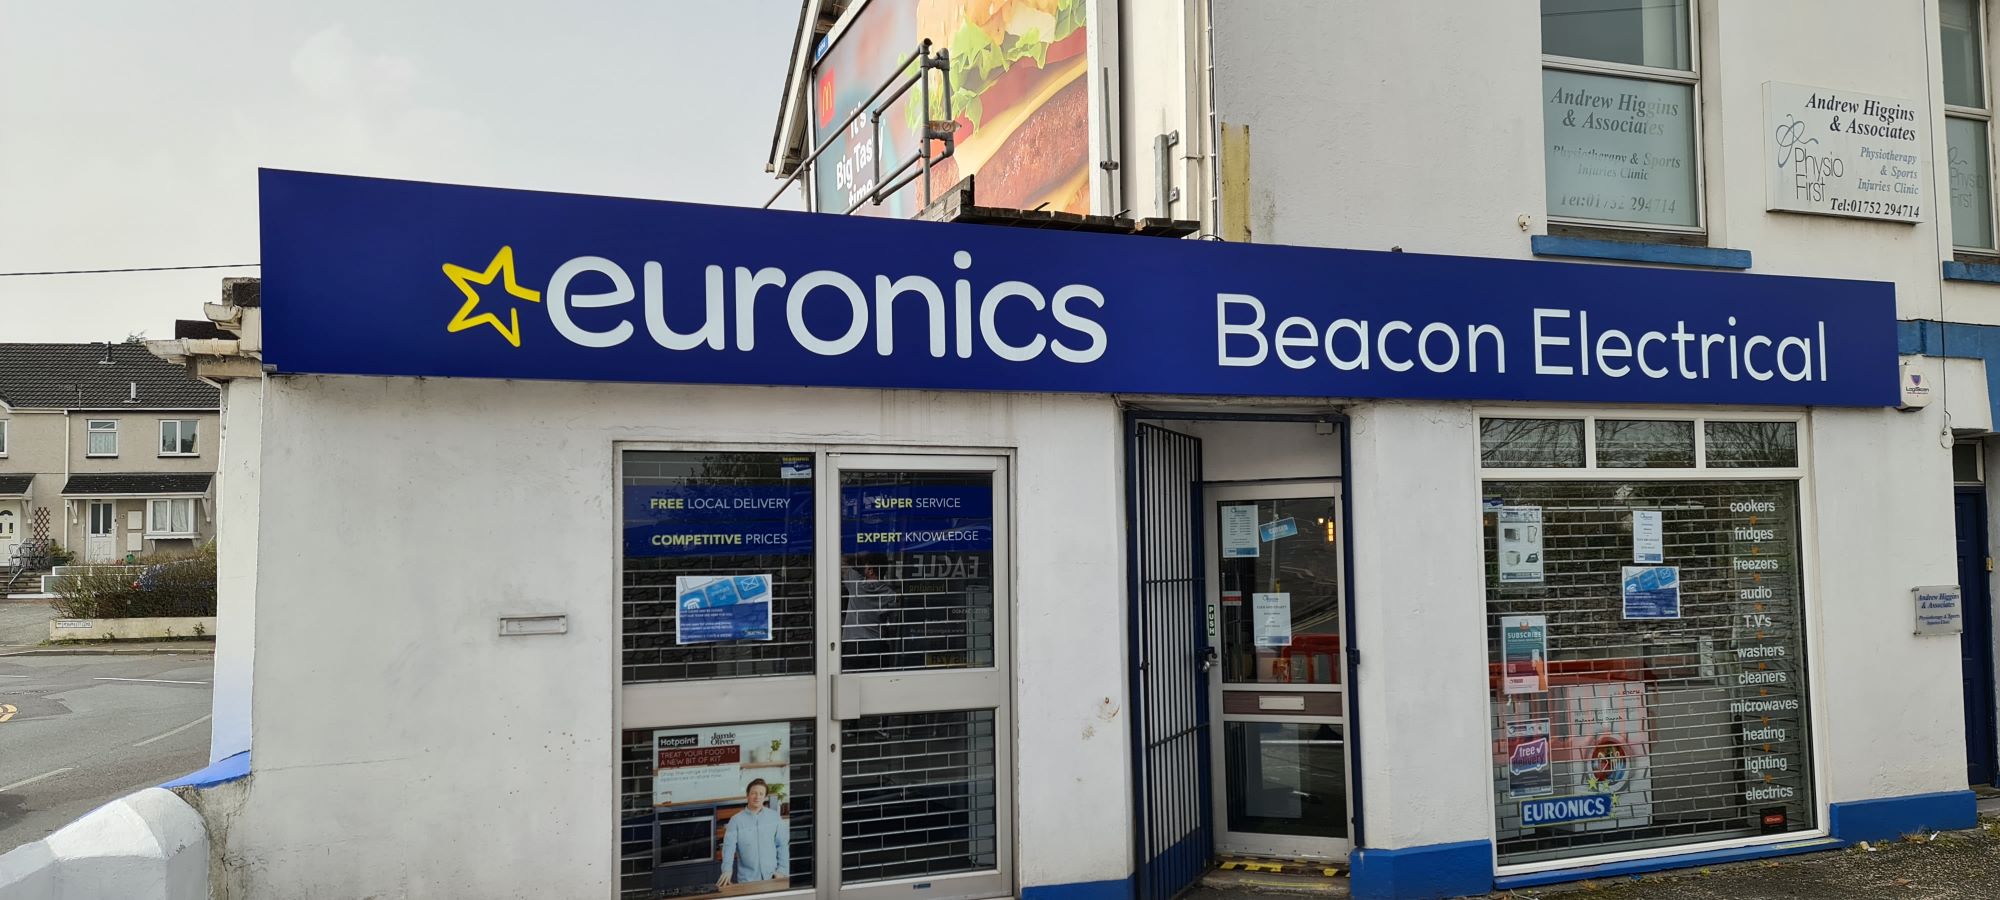 Beacon Electrical - Plymstock